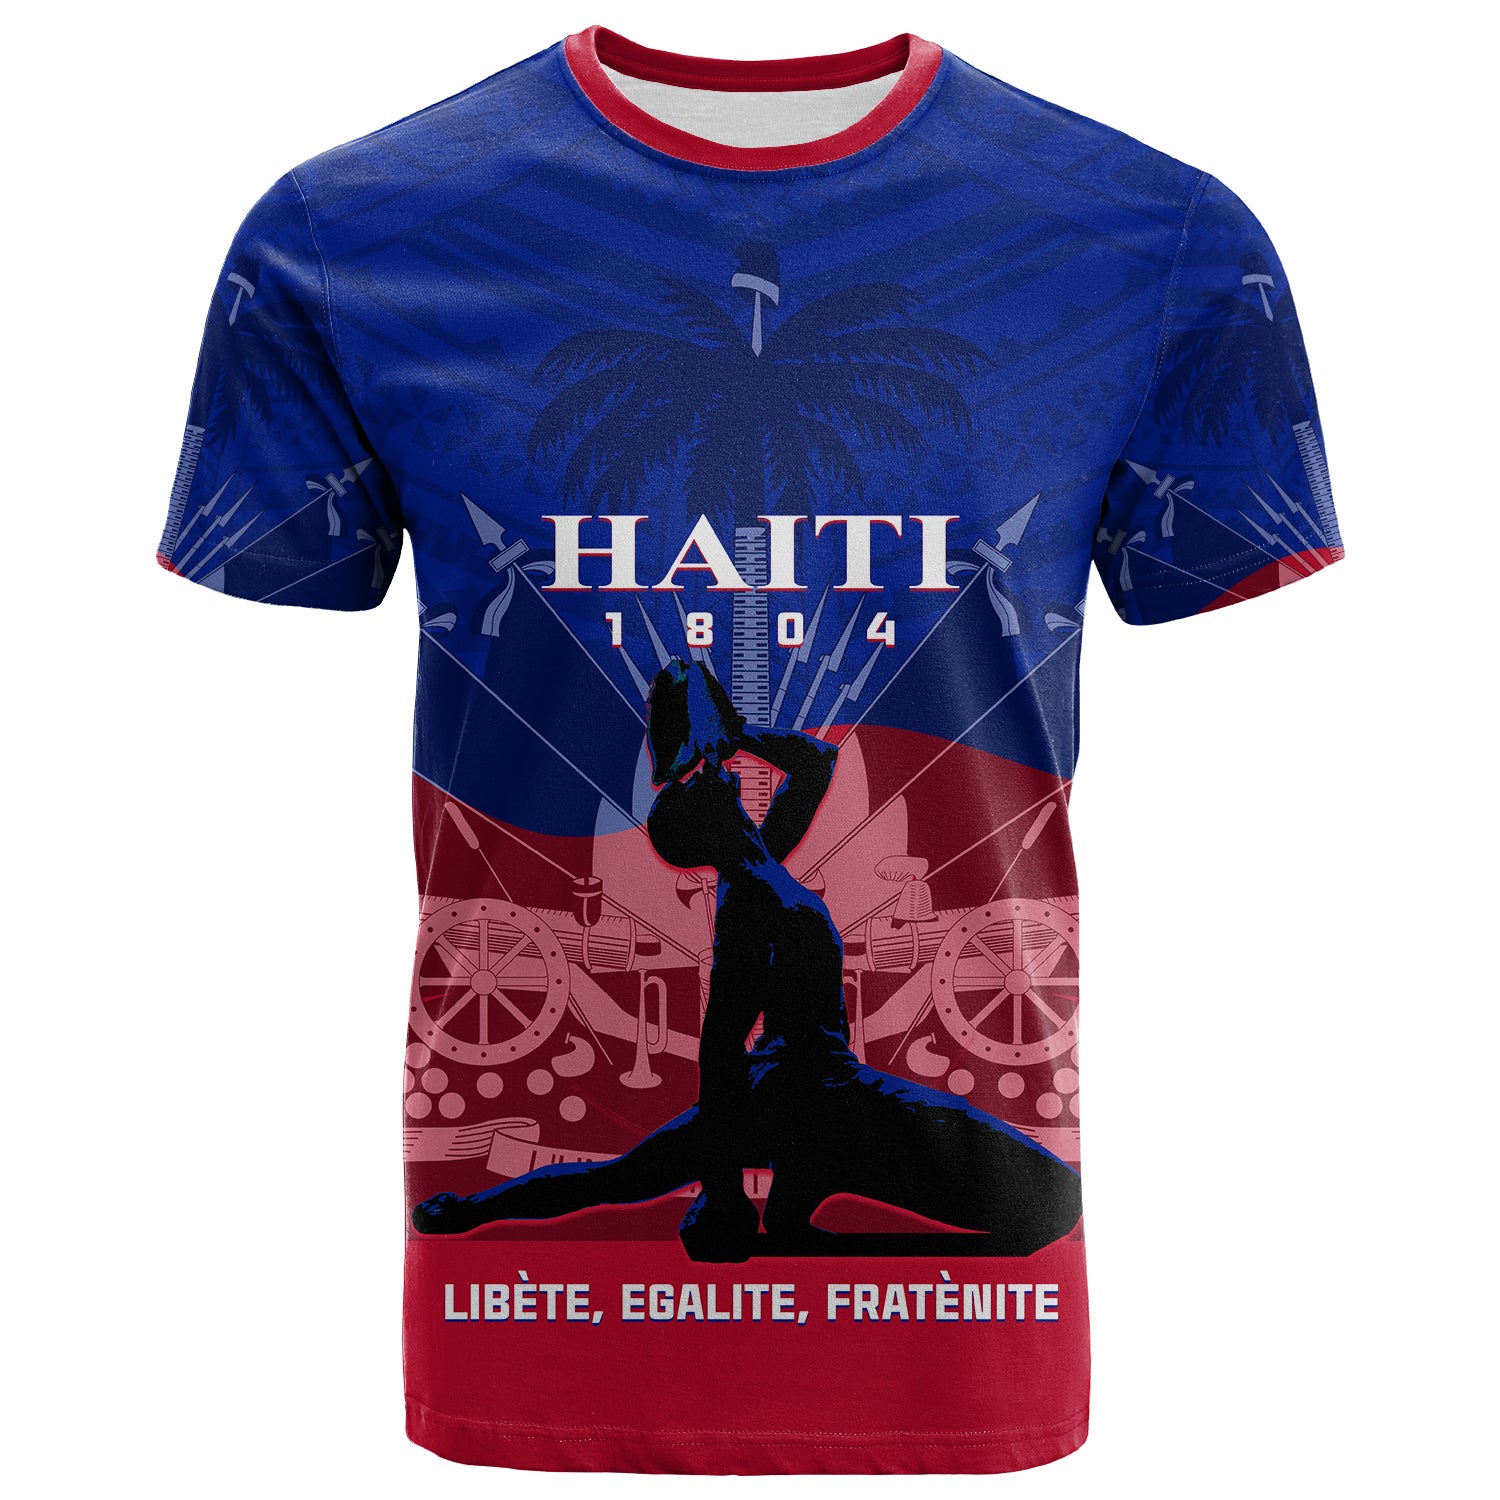 Haiti T Shirt Negre Marron With Coat Of Arms Polynesian Style LT14